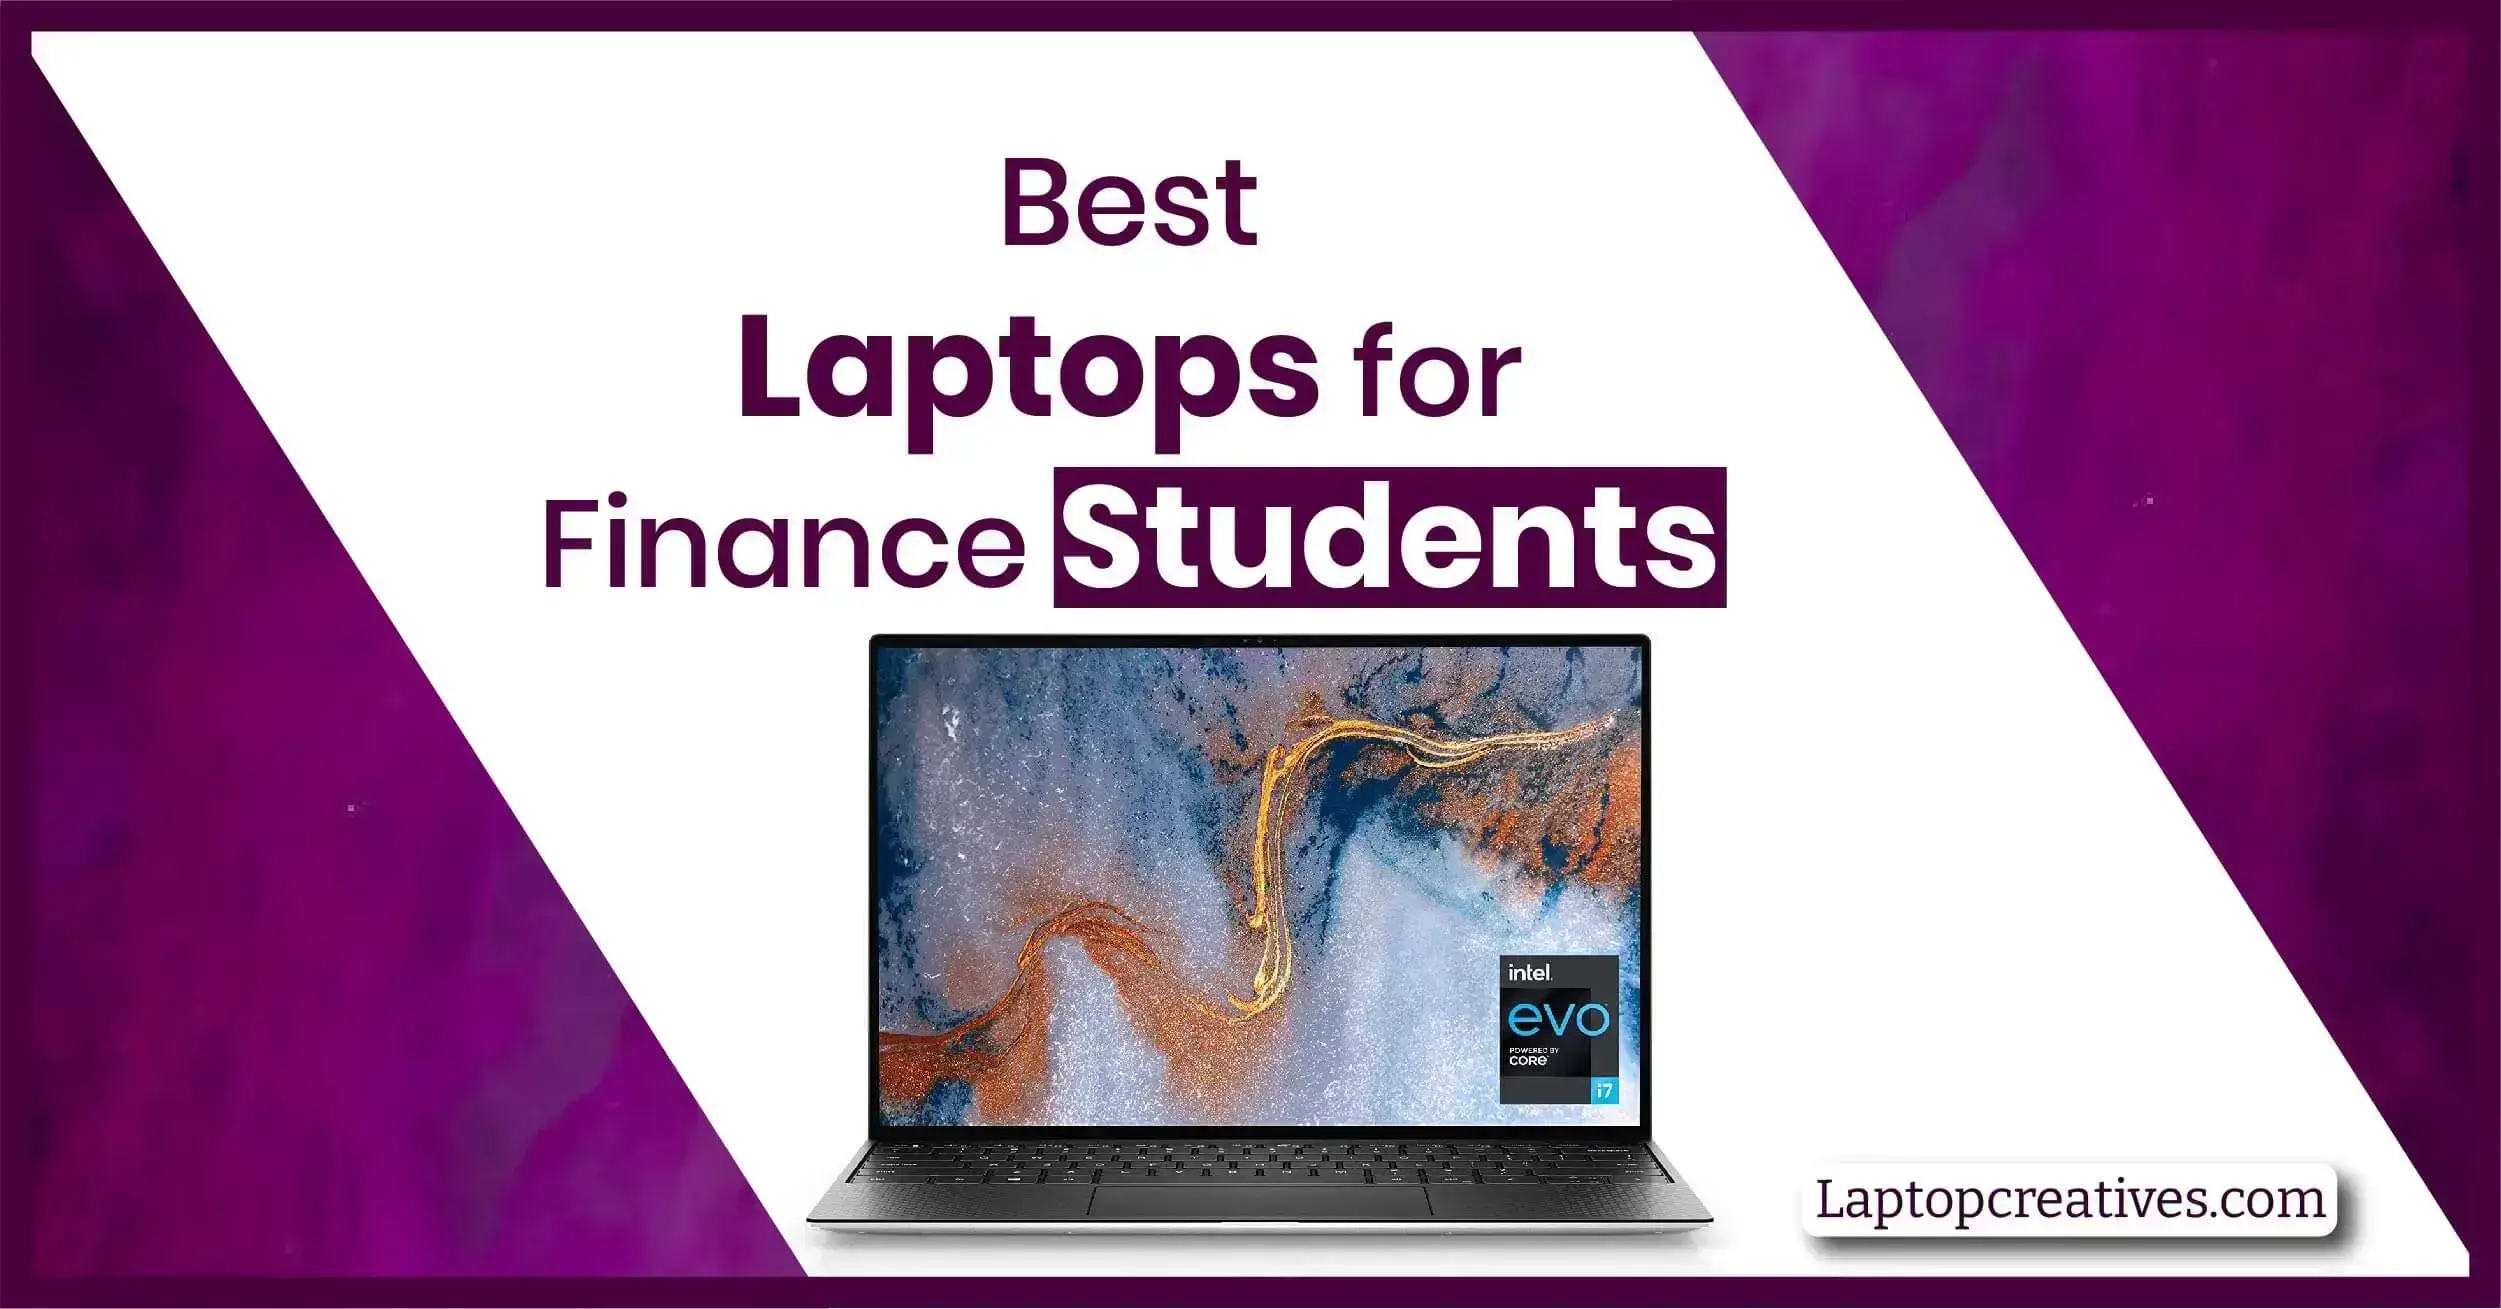 Best Laptops for Finance Students